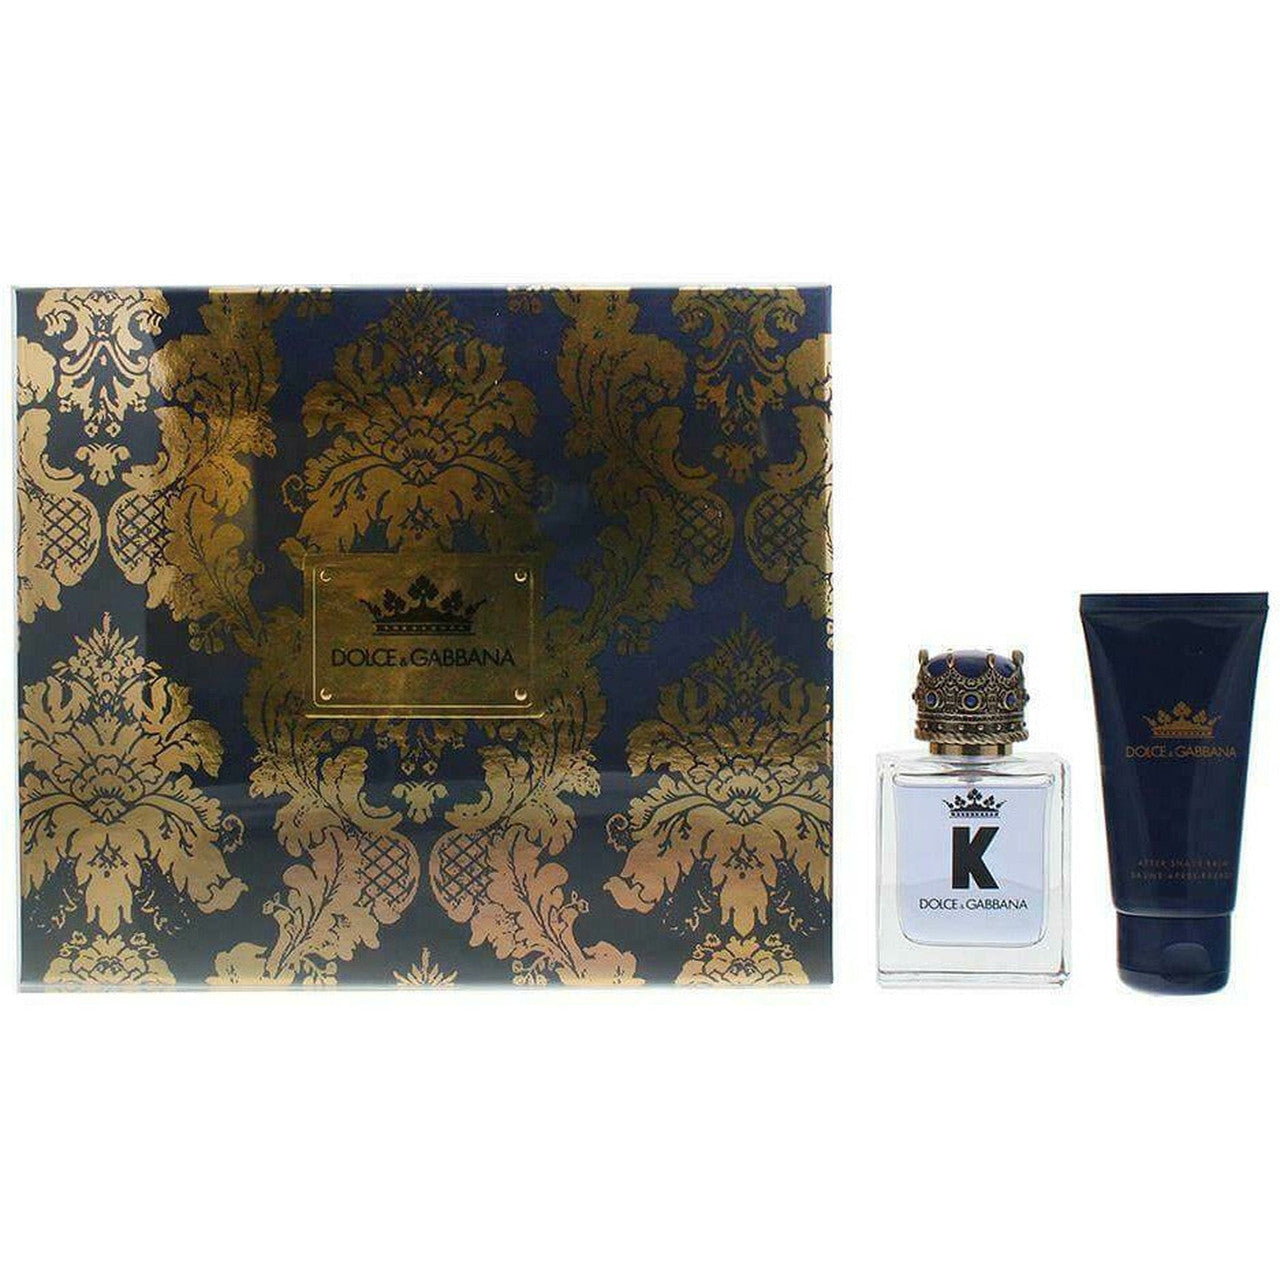 Dolce & Gabbana K Gift Set 50ml EDT + 50ml Aftershave Balm